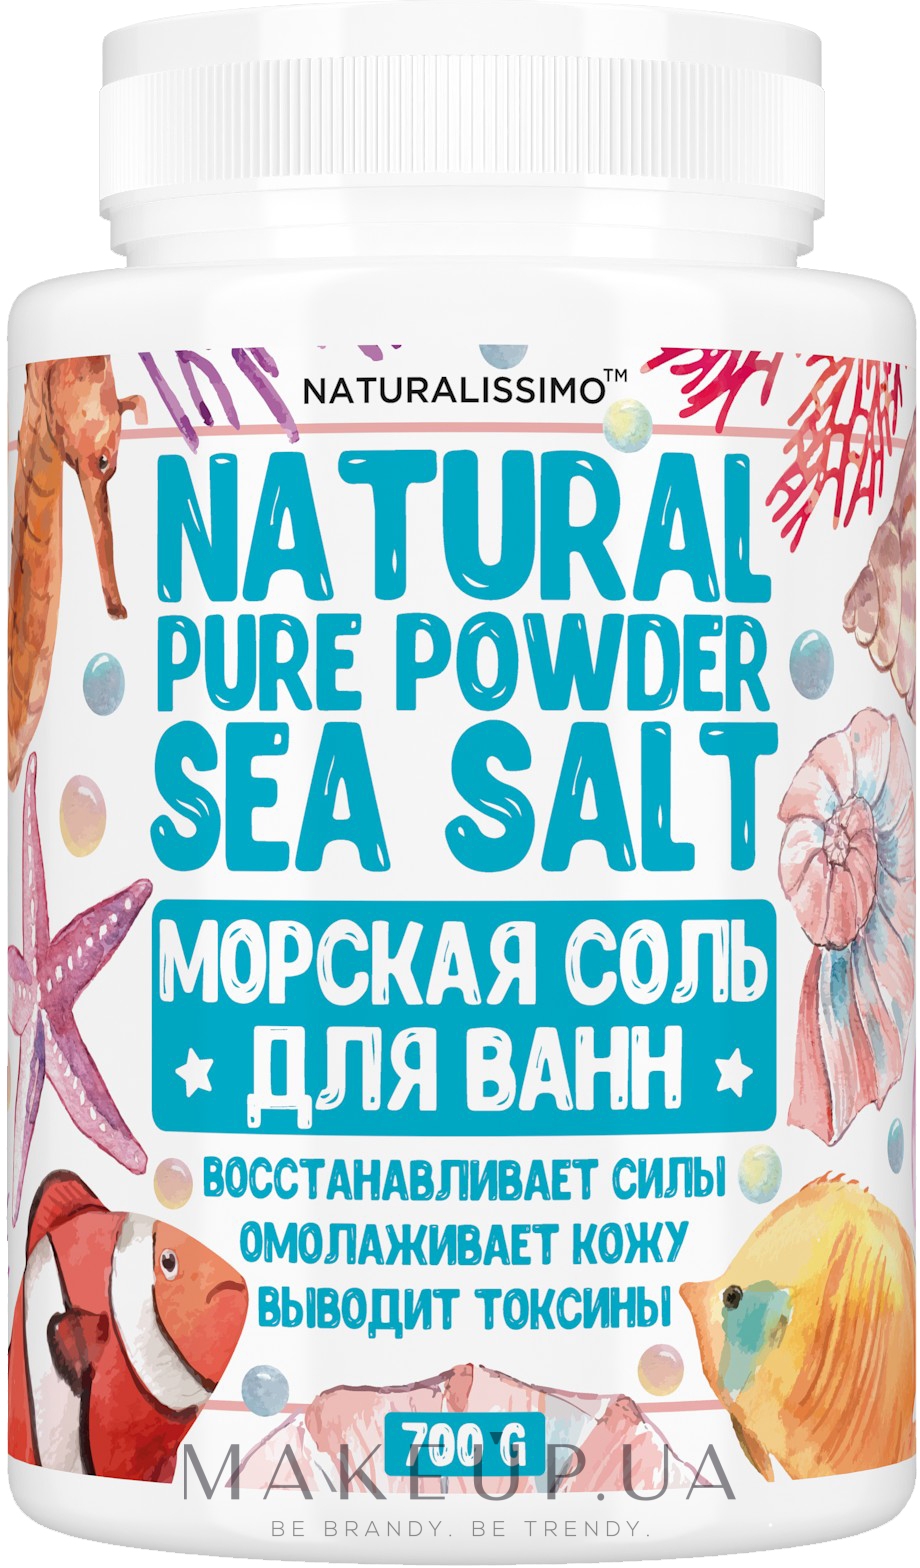 Натуральна пудра морської солі для ванн - Naturalissimo Natural Pure Powder Sea Salt — фото 700g